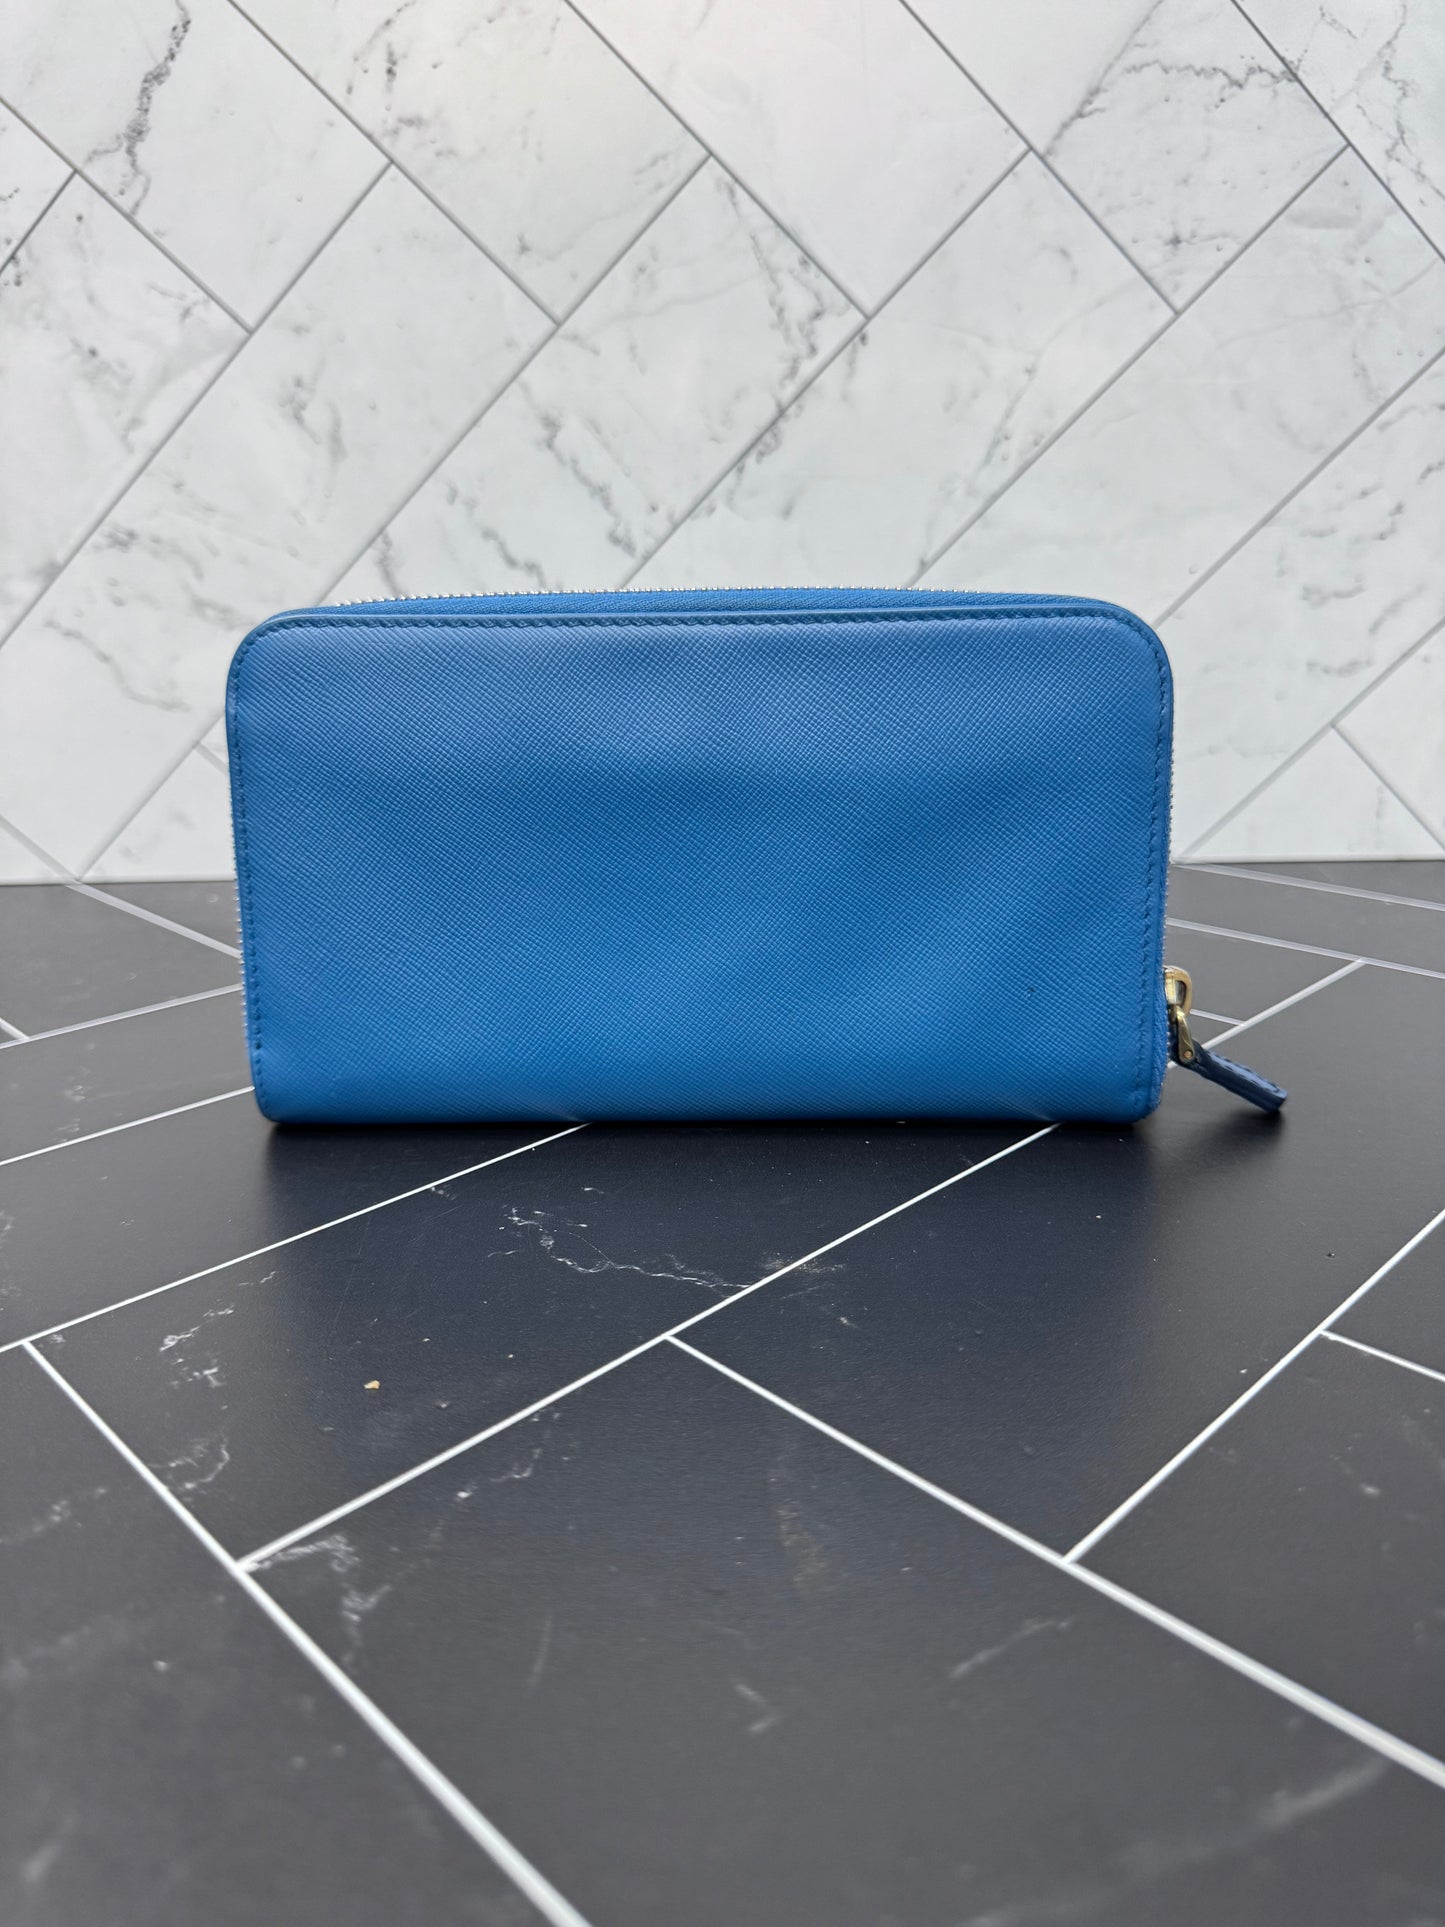 Prada Blue Saffiano Leather Zippy Wallet